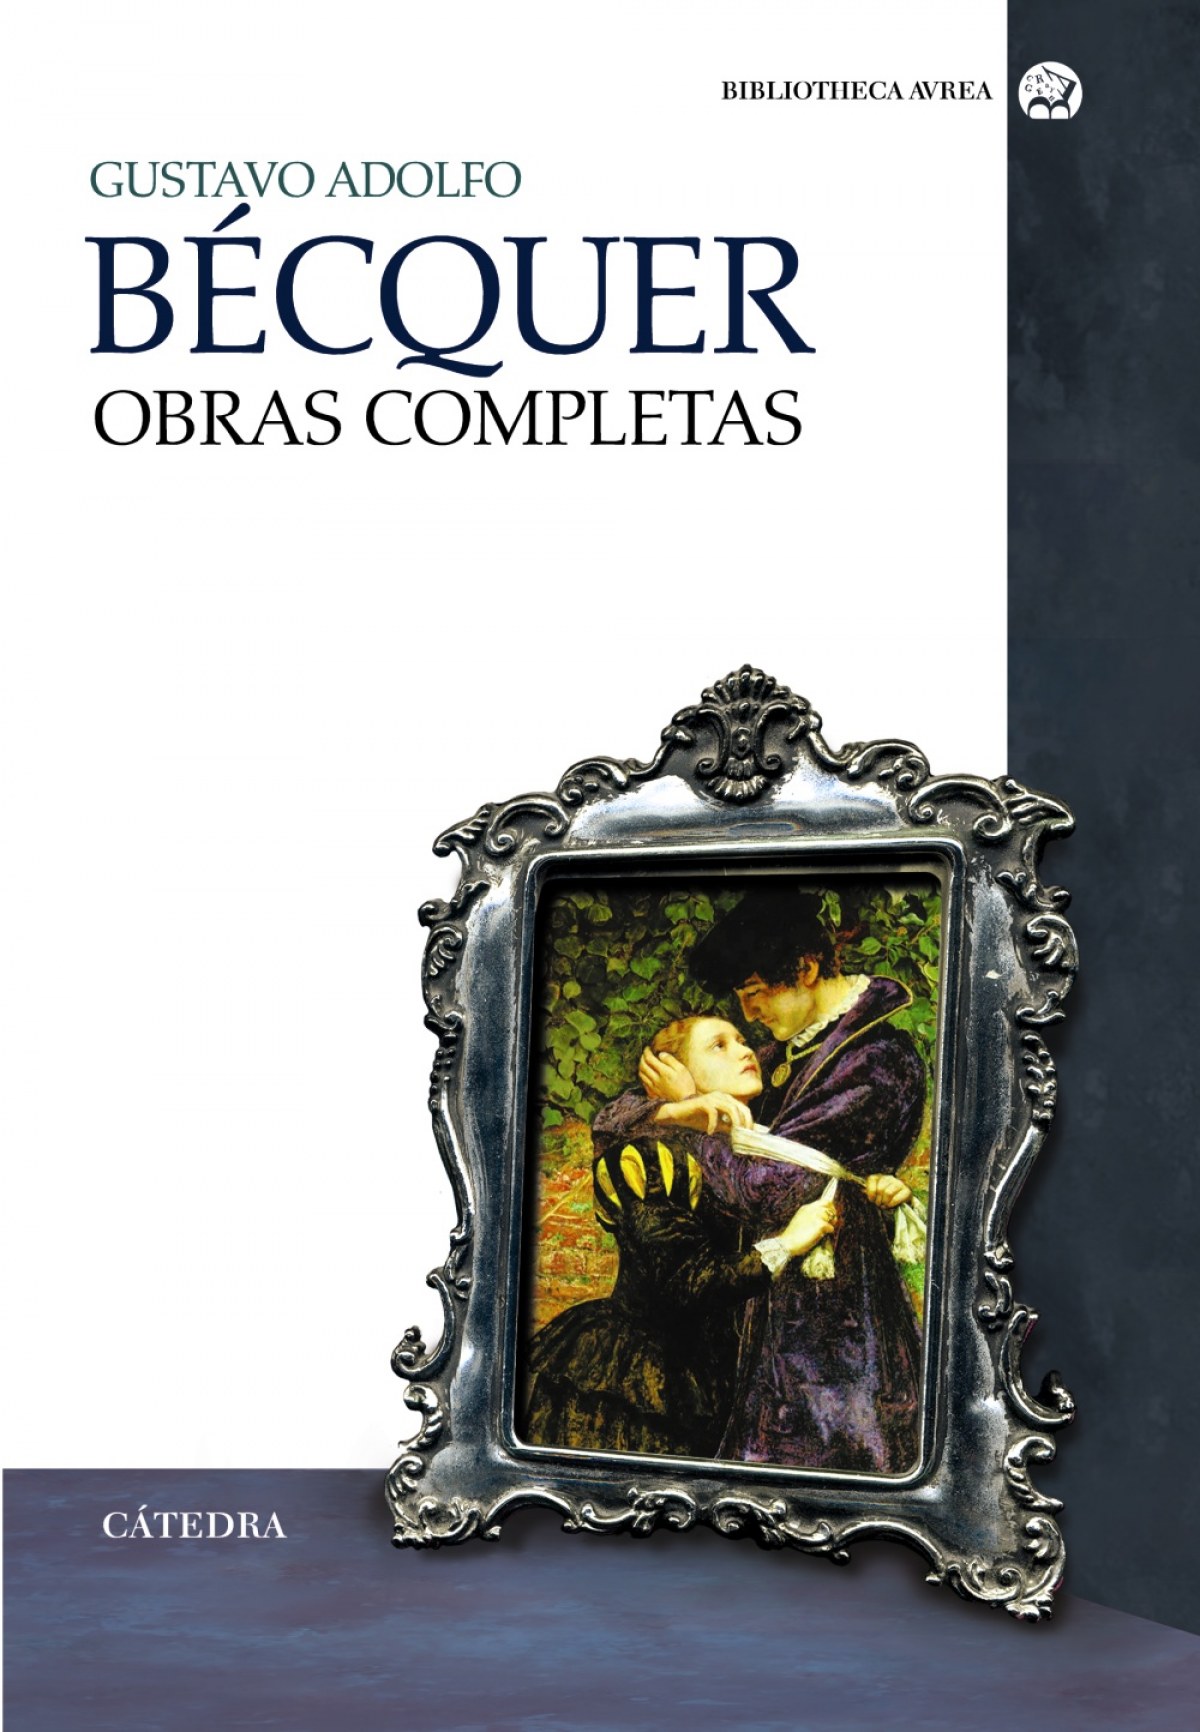 Obras completas - Becquer, Gustavo Adolfo